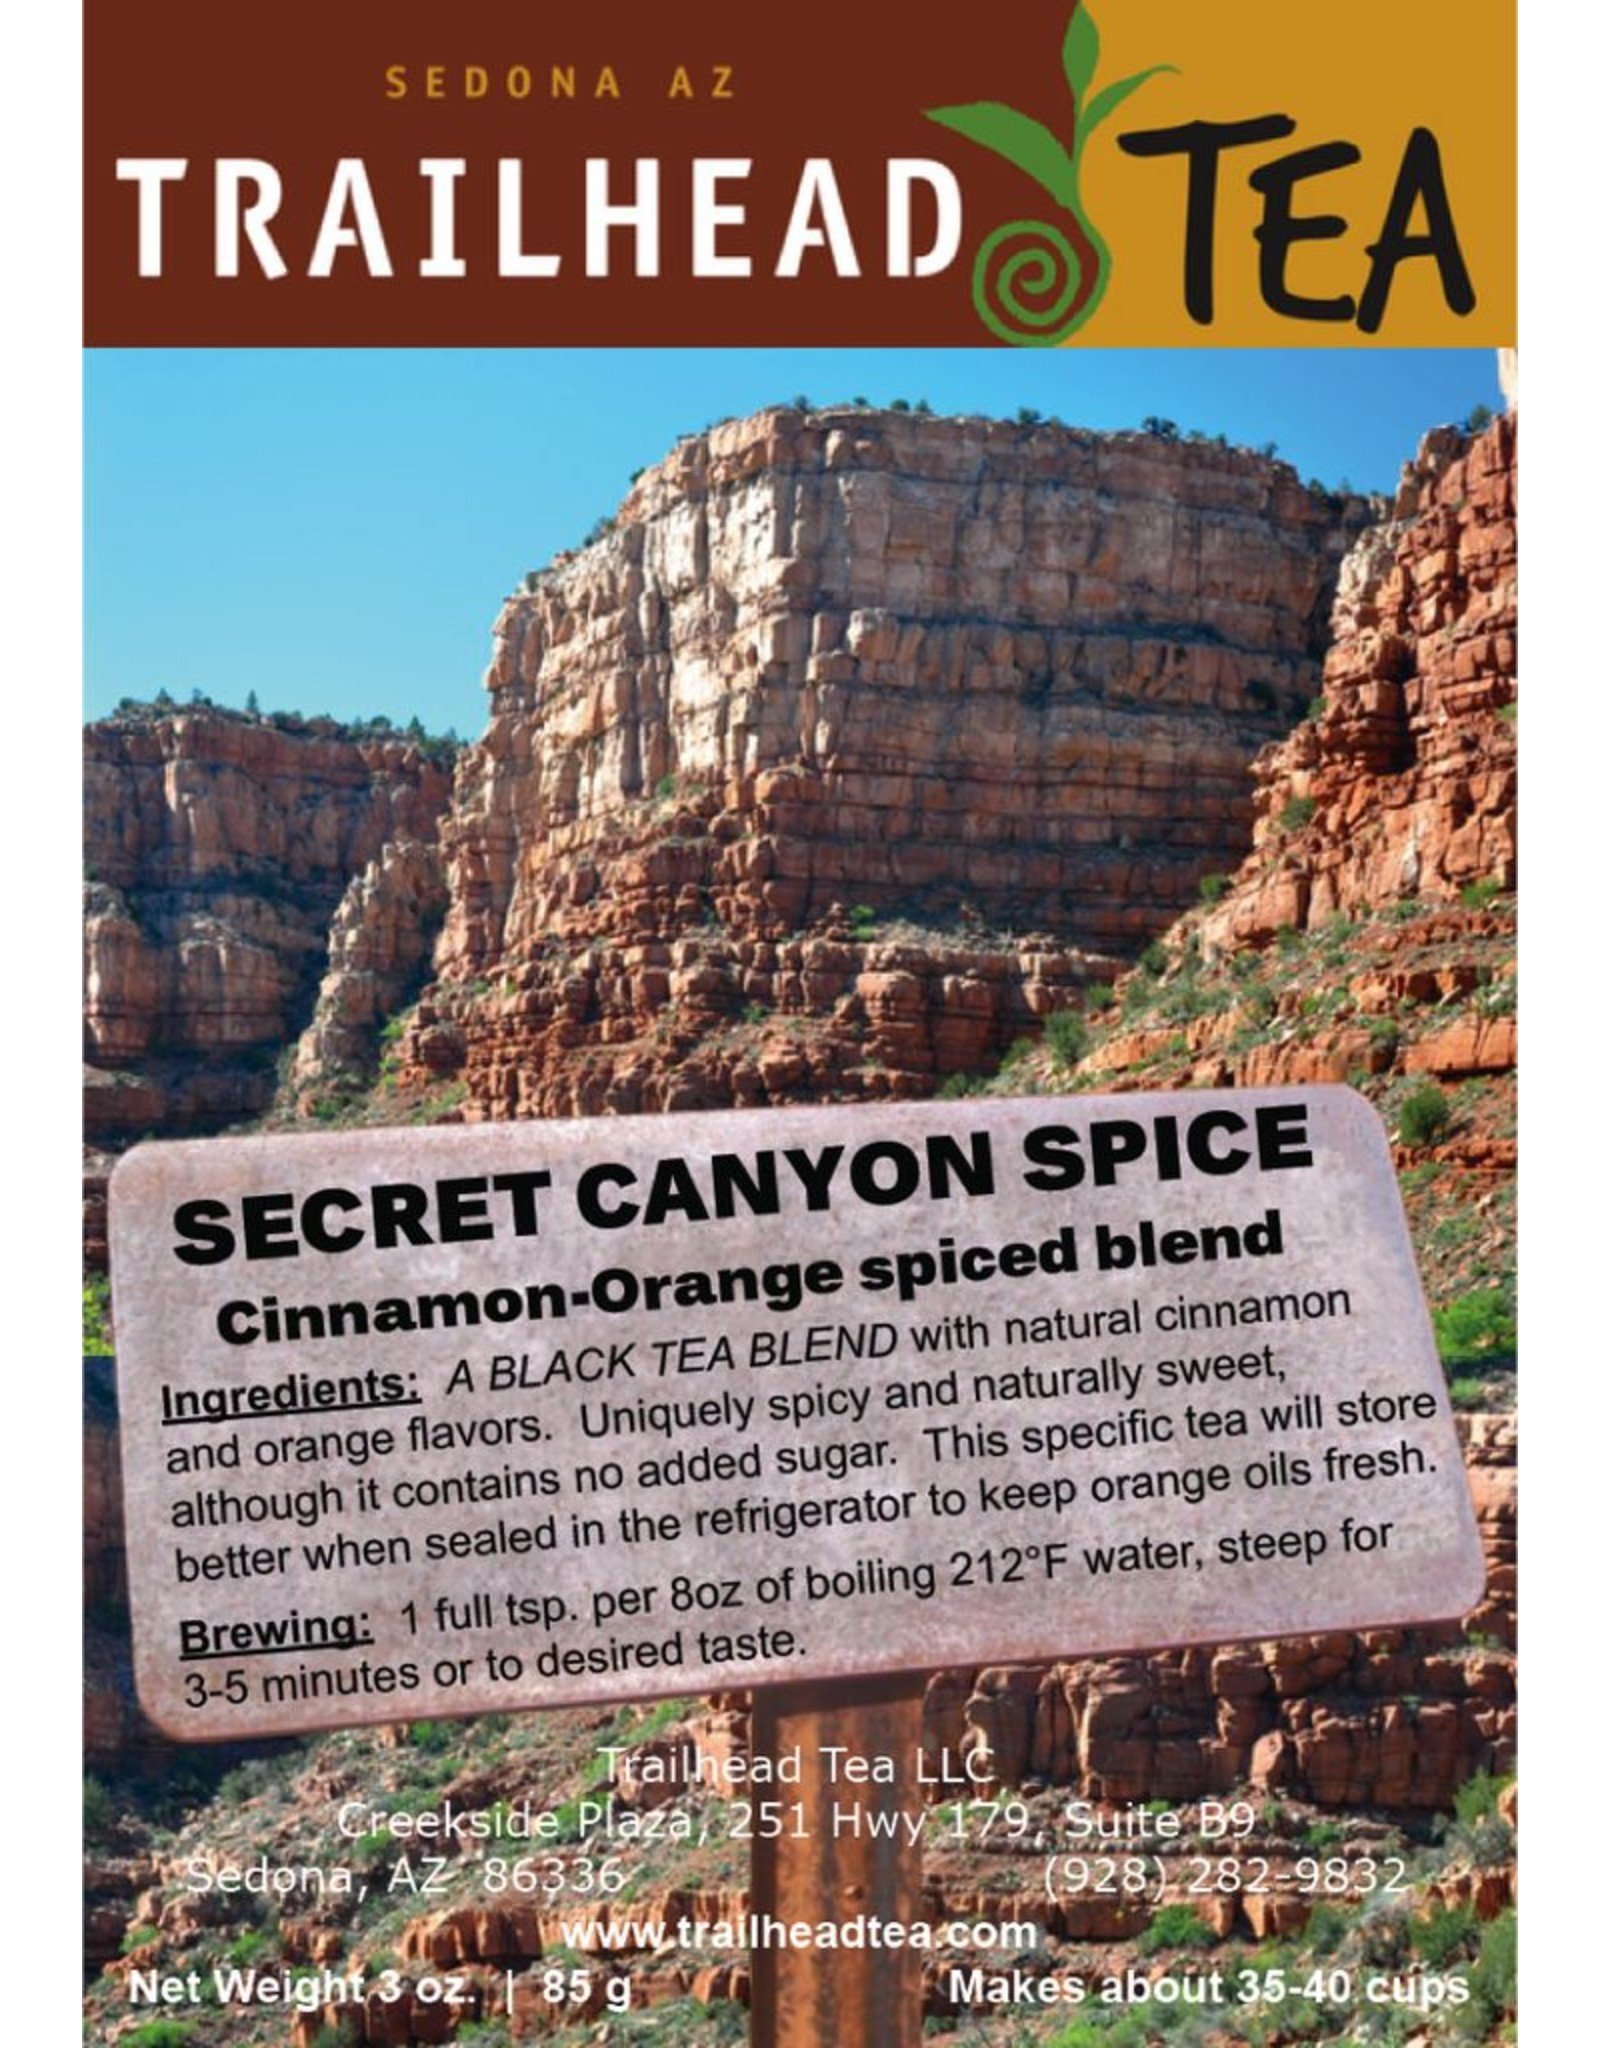 Tea from China Secret Canyon Spice